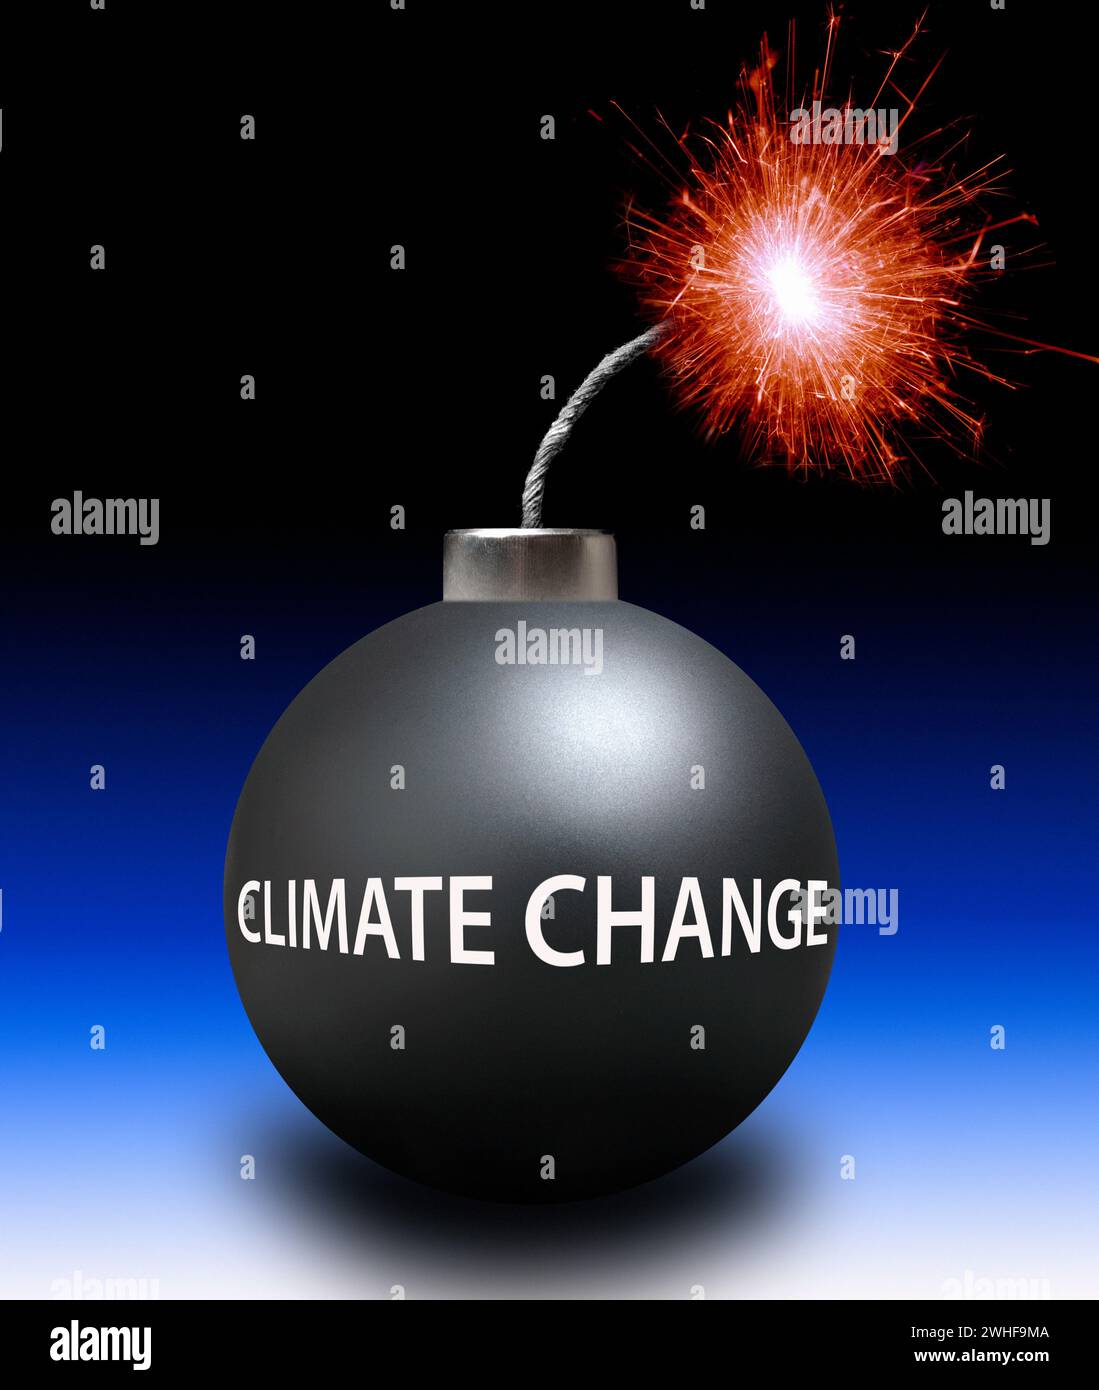 Climate crisis, conceptual illustration Stock Photo